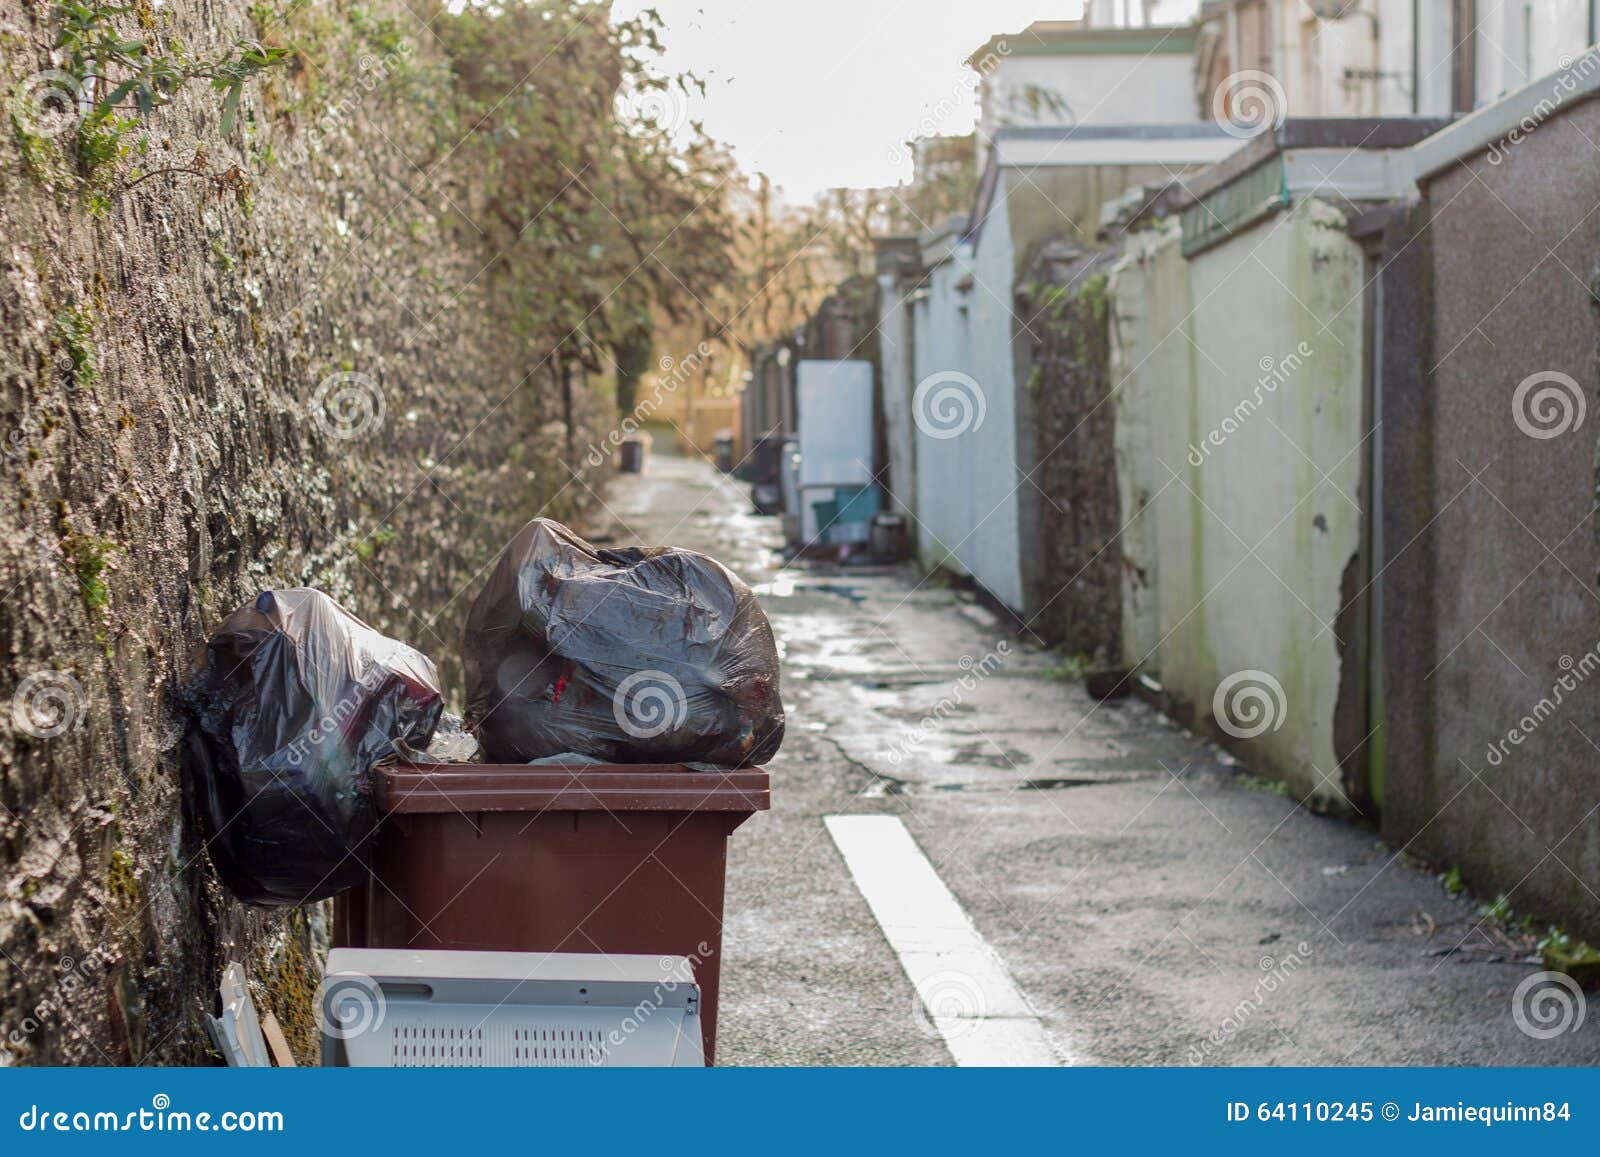 british backstreet with waste bins